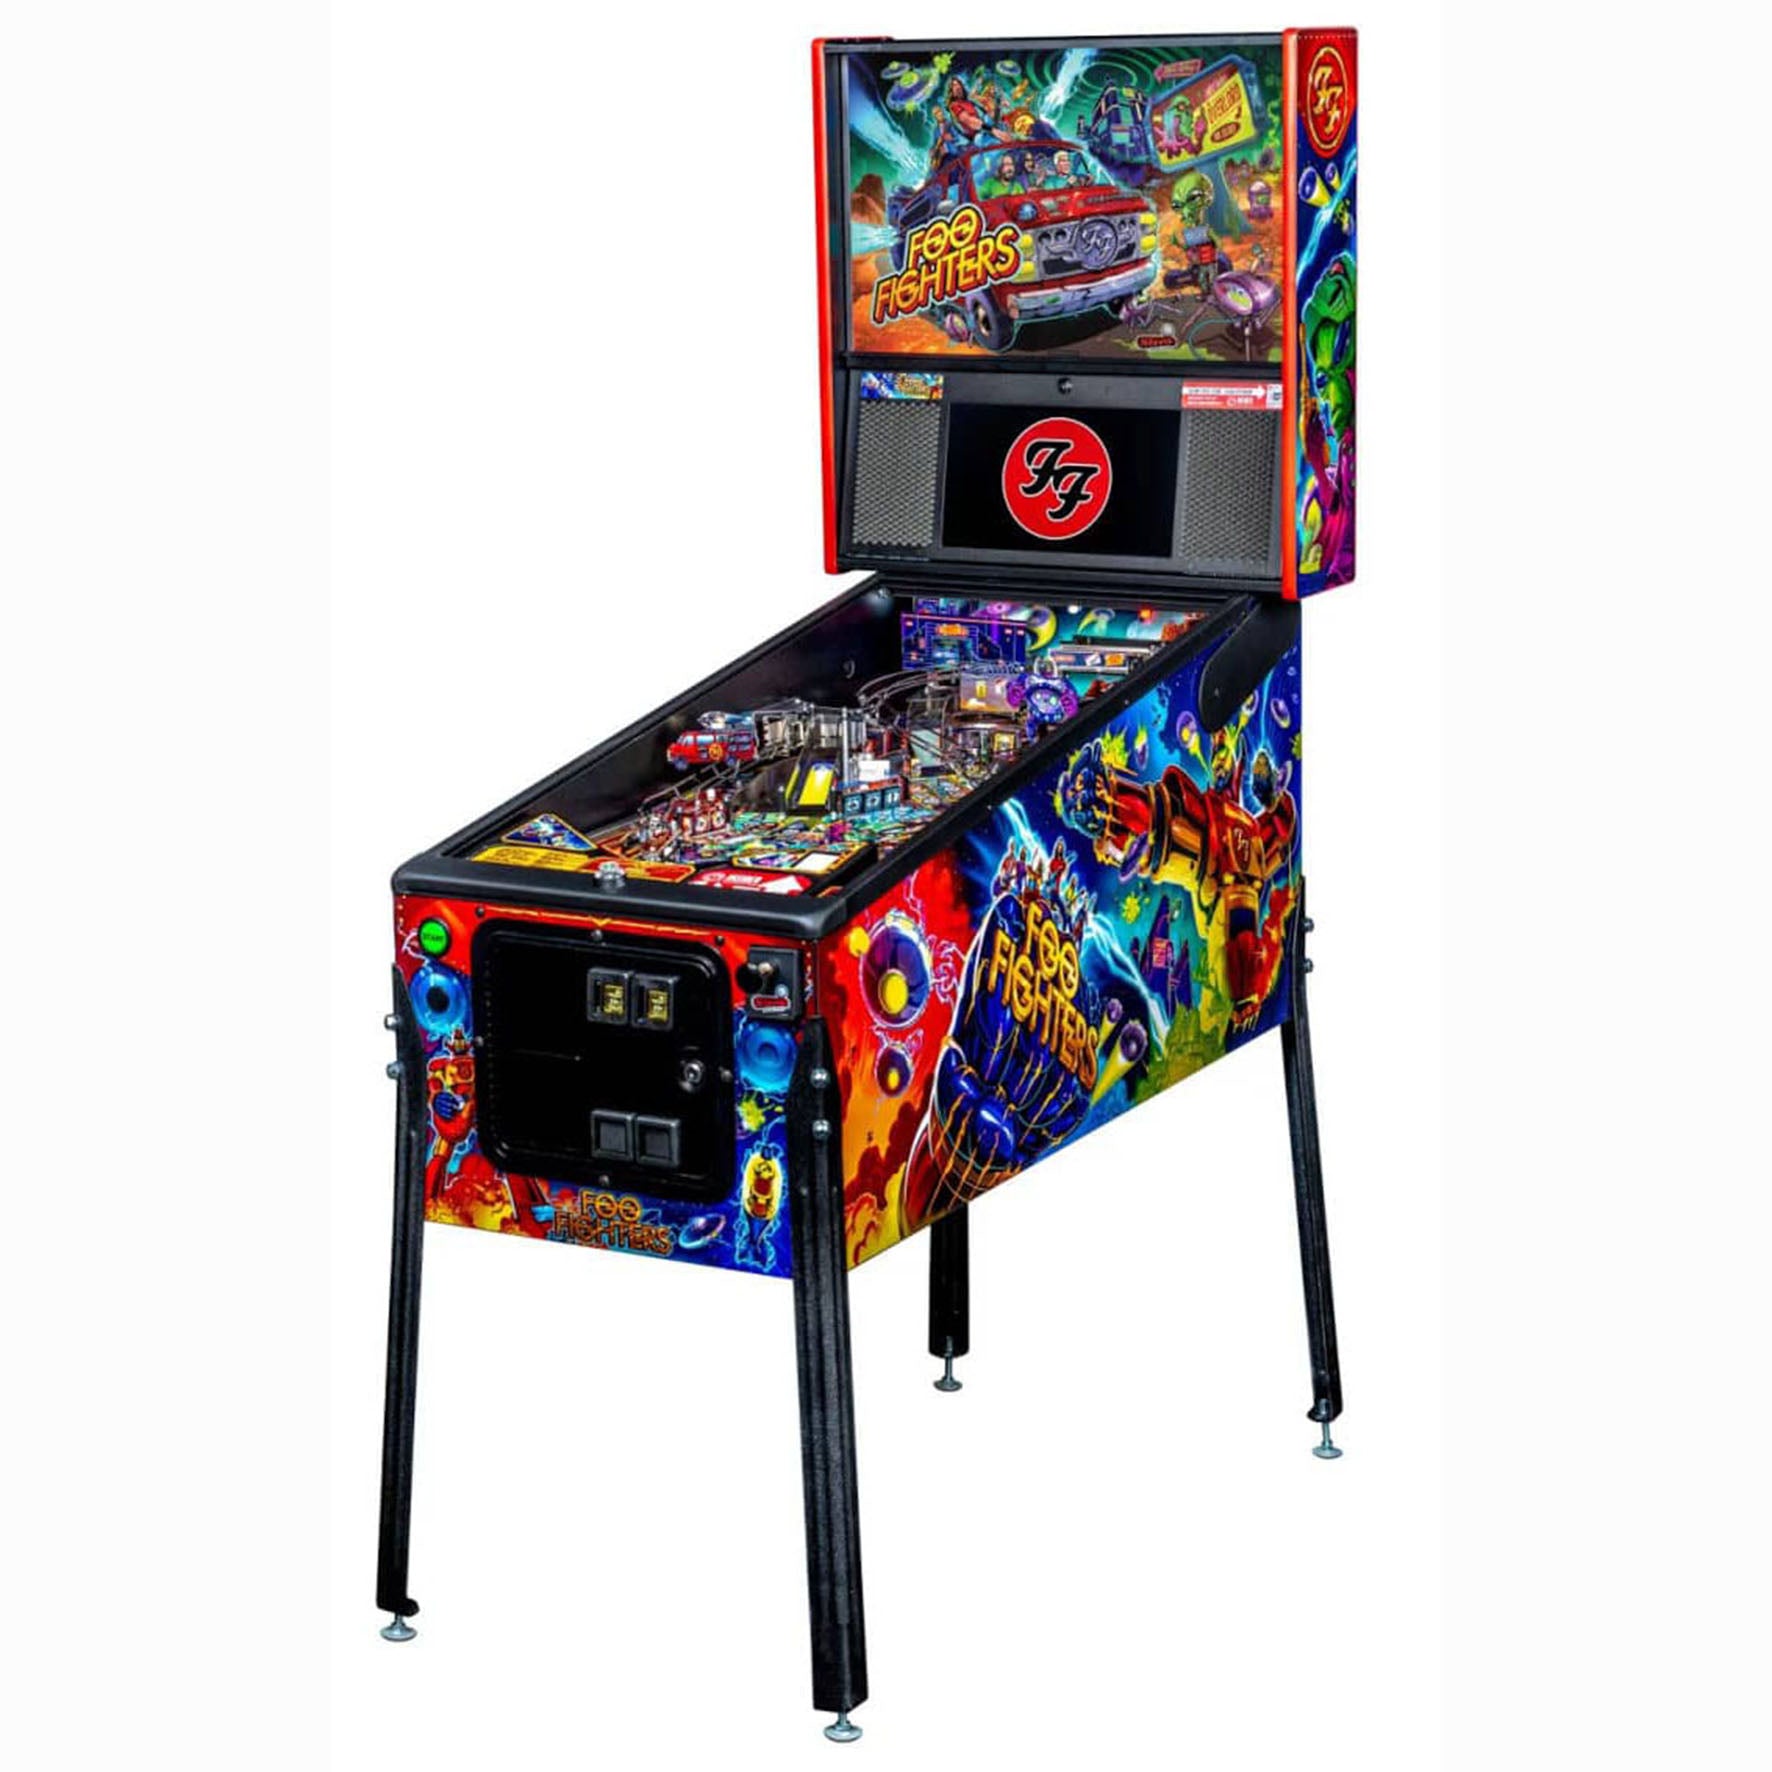 Foo Fighters Pro Pinball Machine by Stern